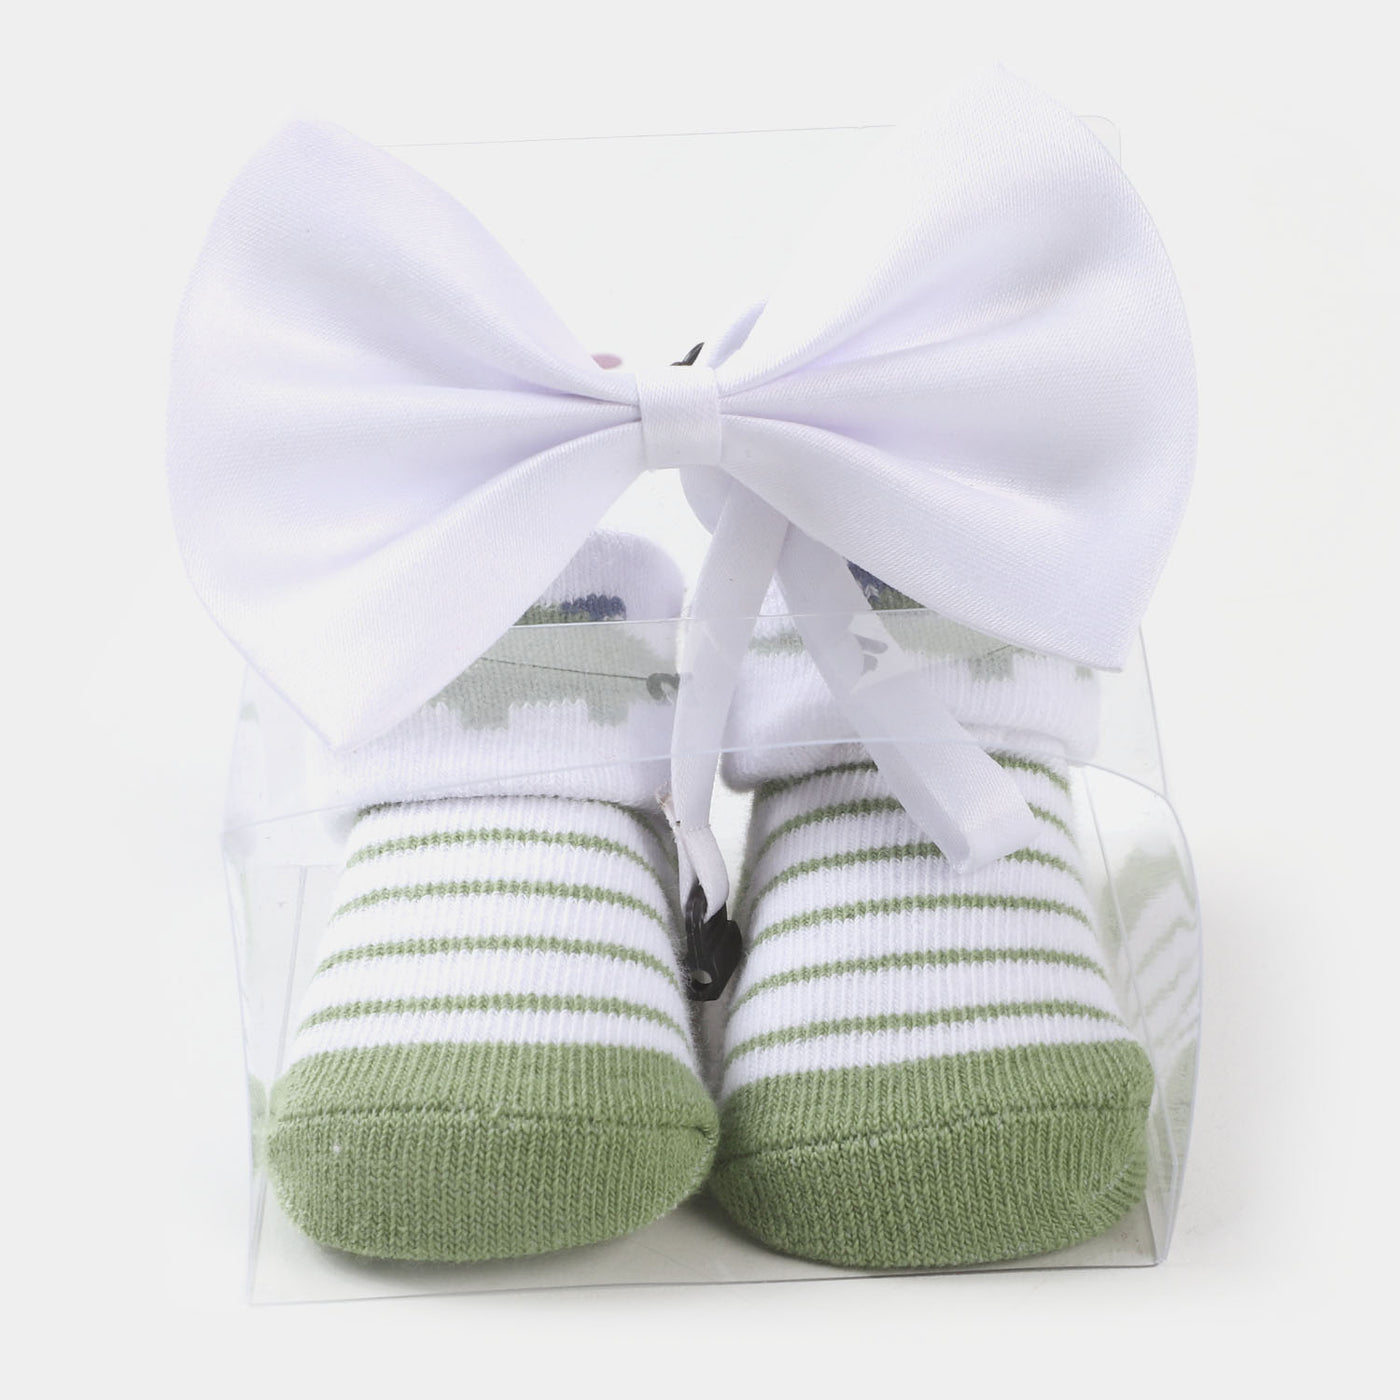 3 Bow Tie & 3 Pair Socks For Infant